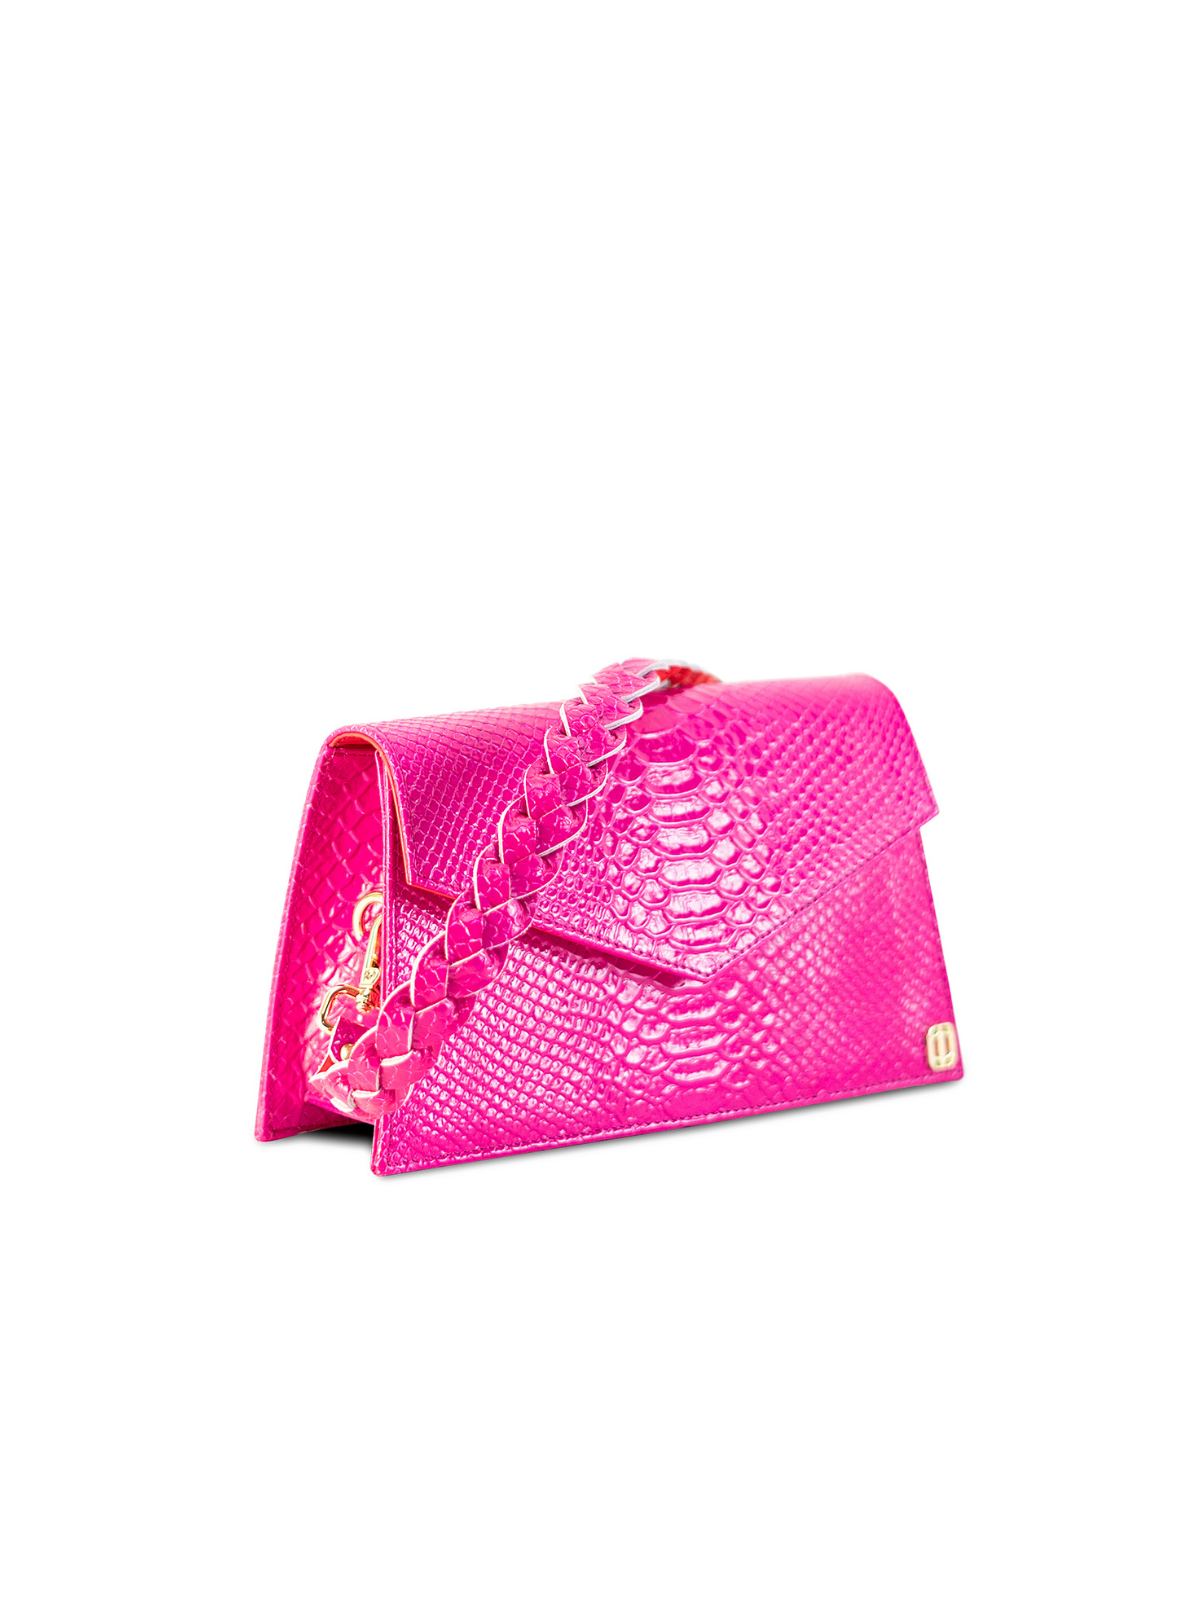 ANIMA IRIS: Black Owned Luxury Designer Handbags | Luxury Accessories ...